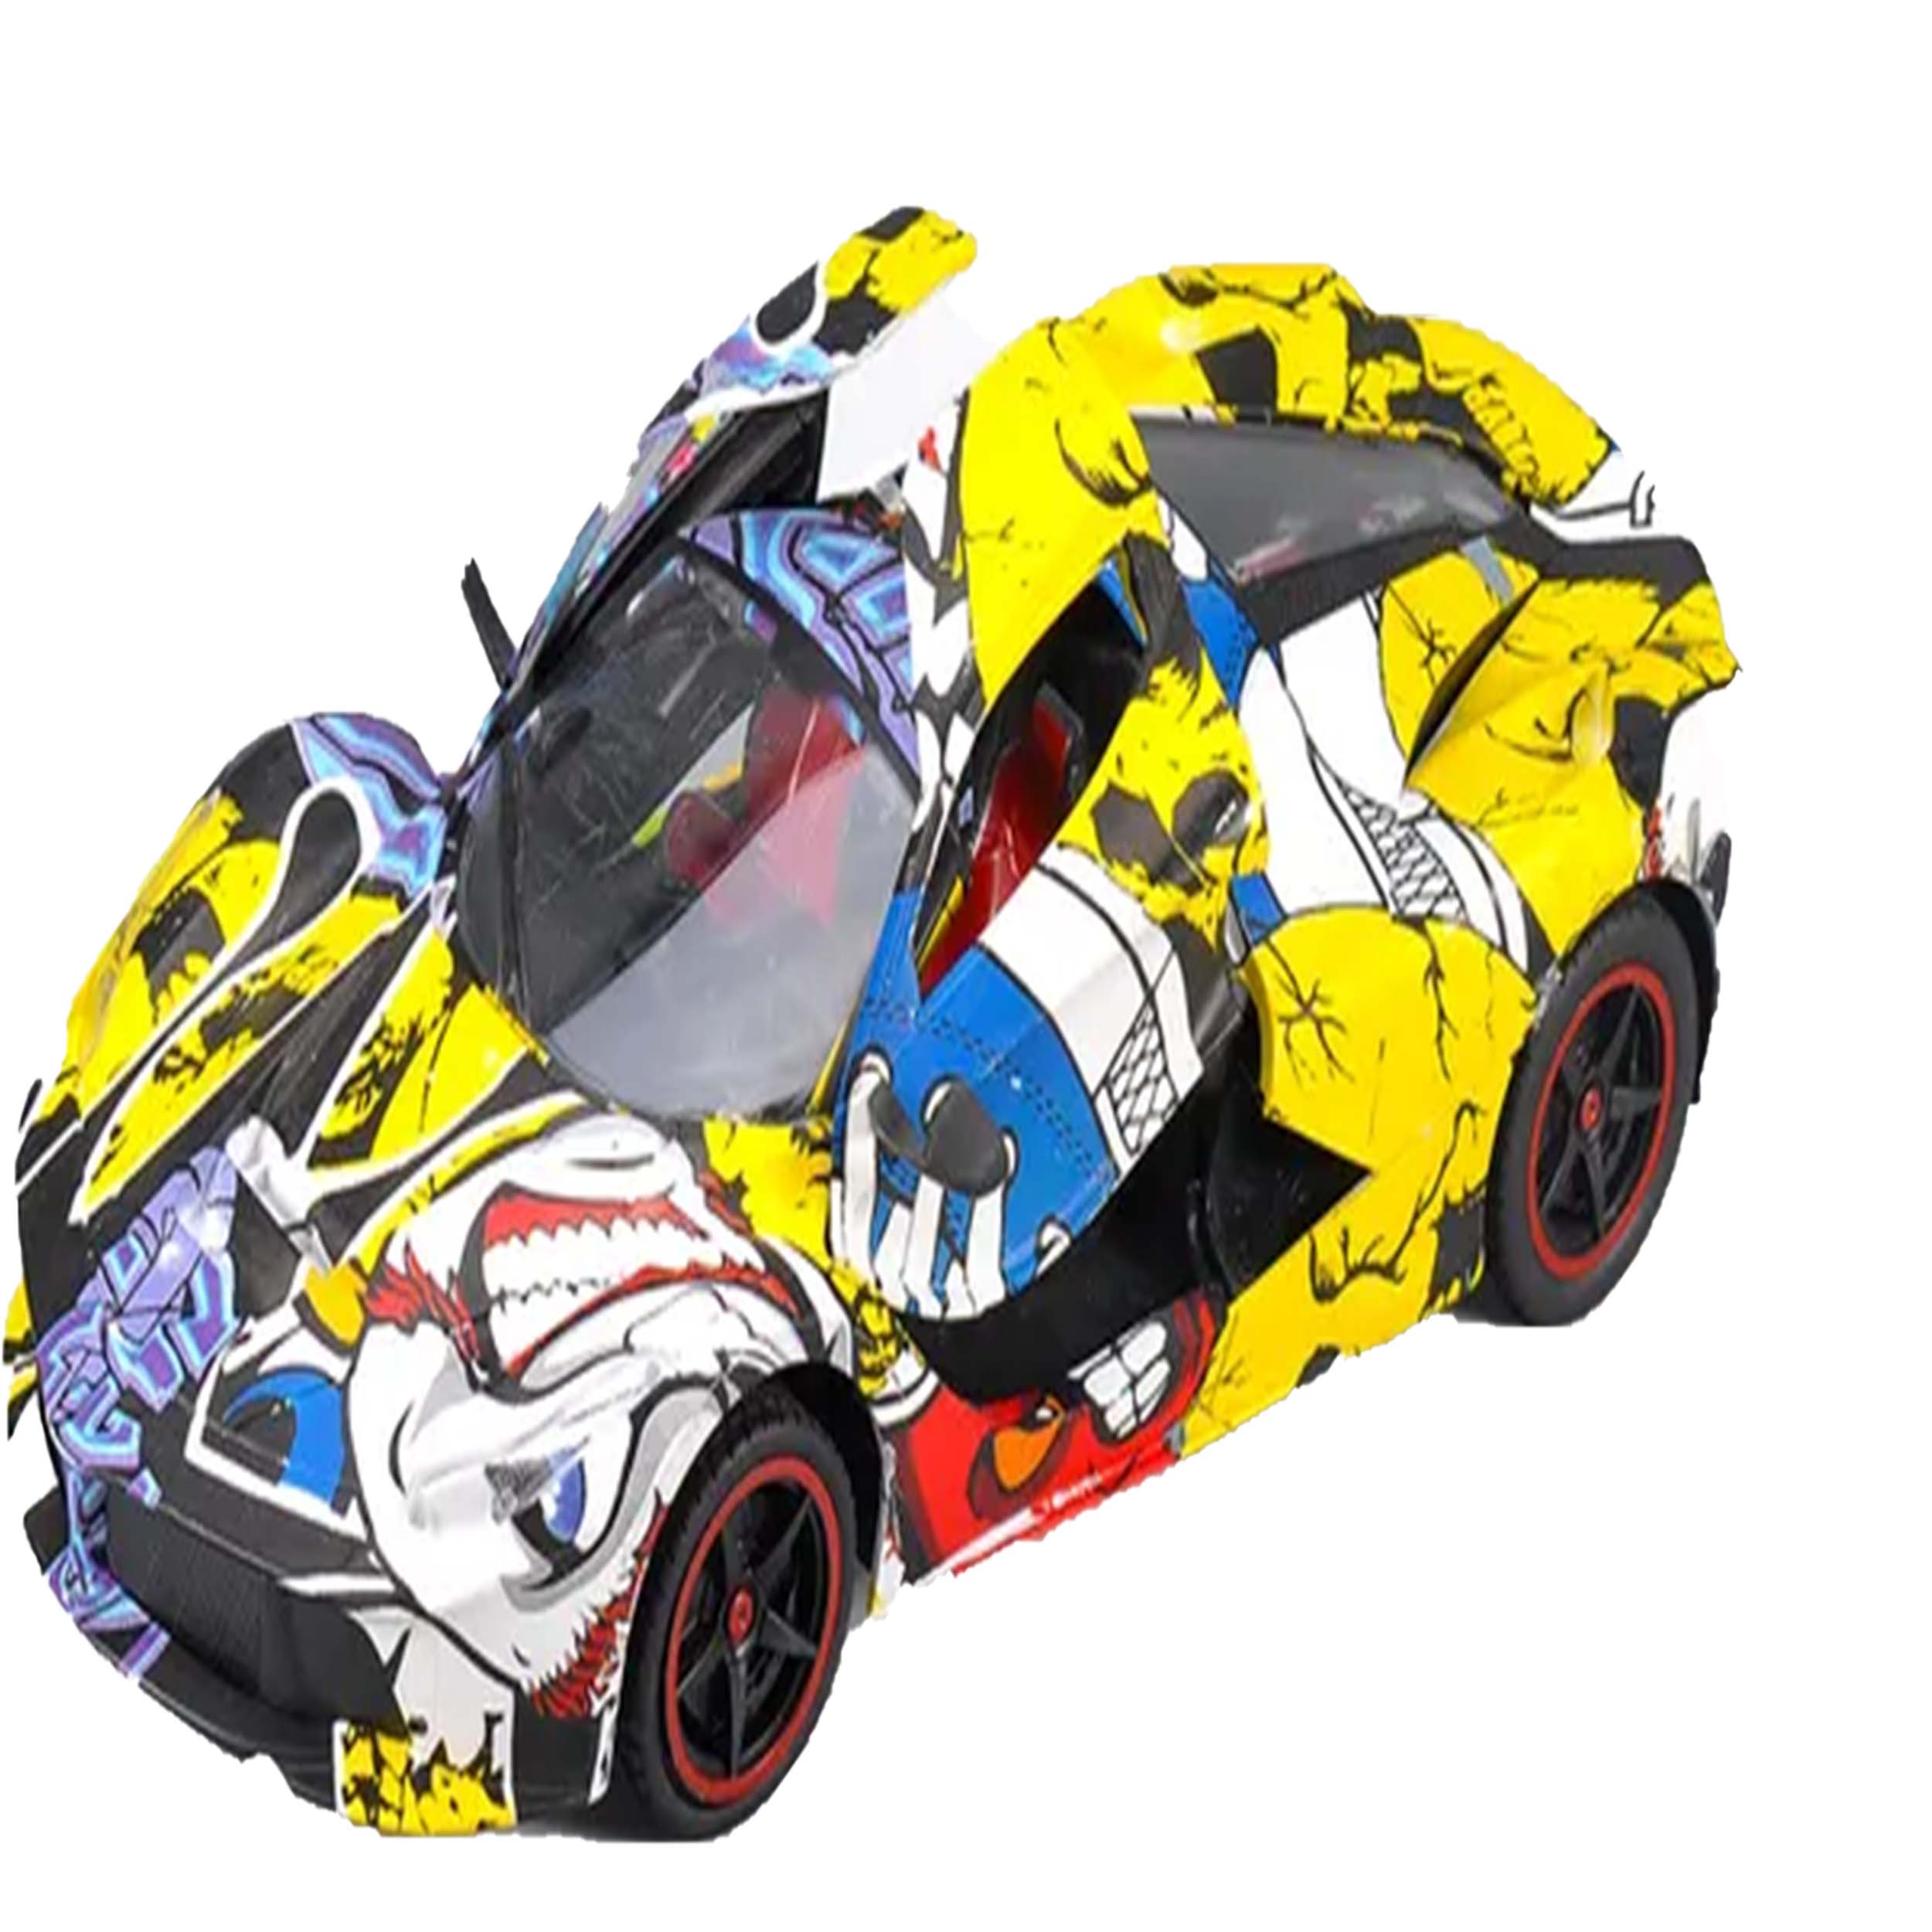 RC Graffiti Race Cars - High-Speed - Piece/Set of 3